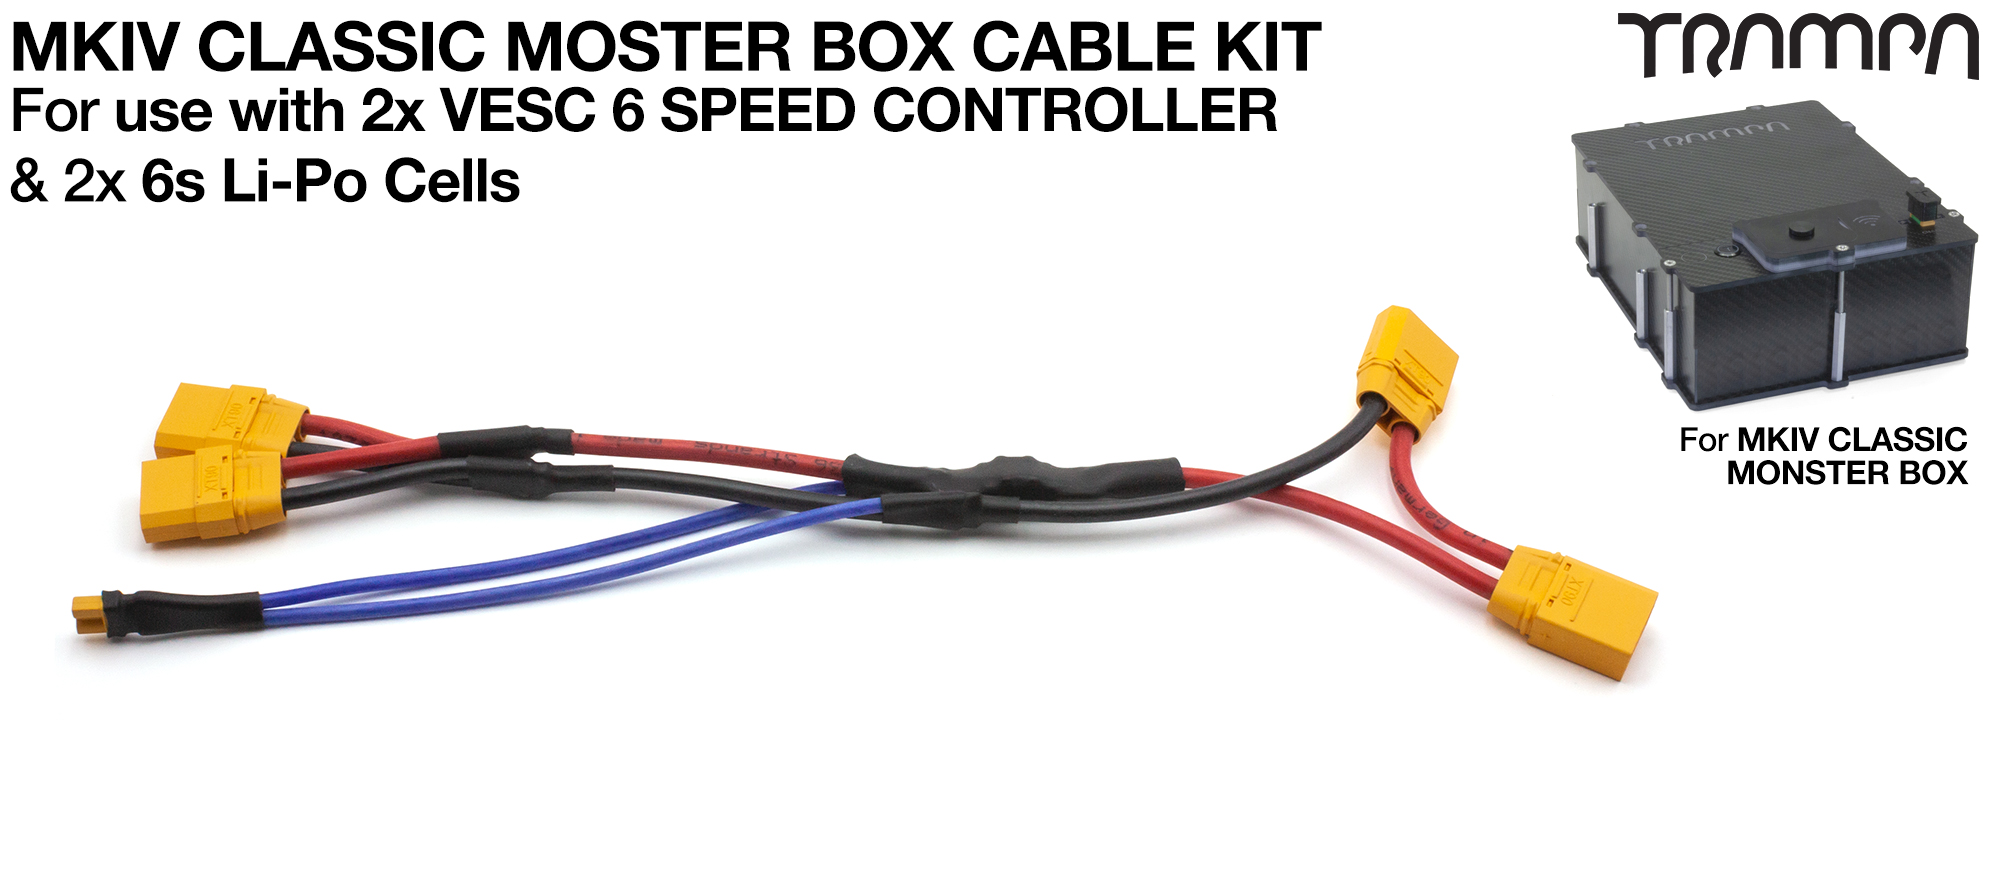 12s Li-Po MkIII MASSIVE Monster Box cable kit for 2x VESC 6 using 2x Li-Po cells 